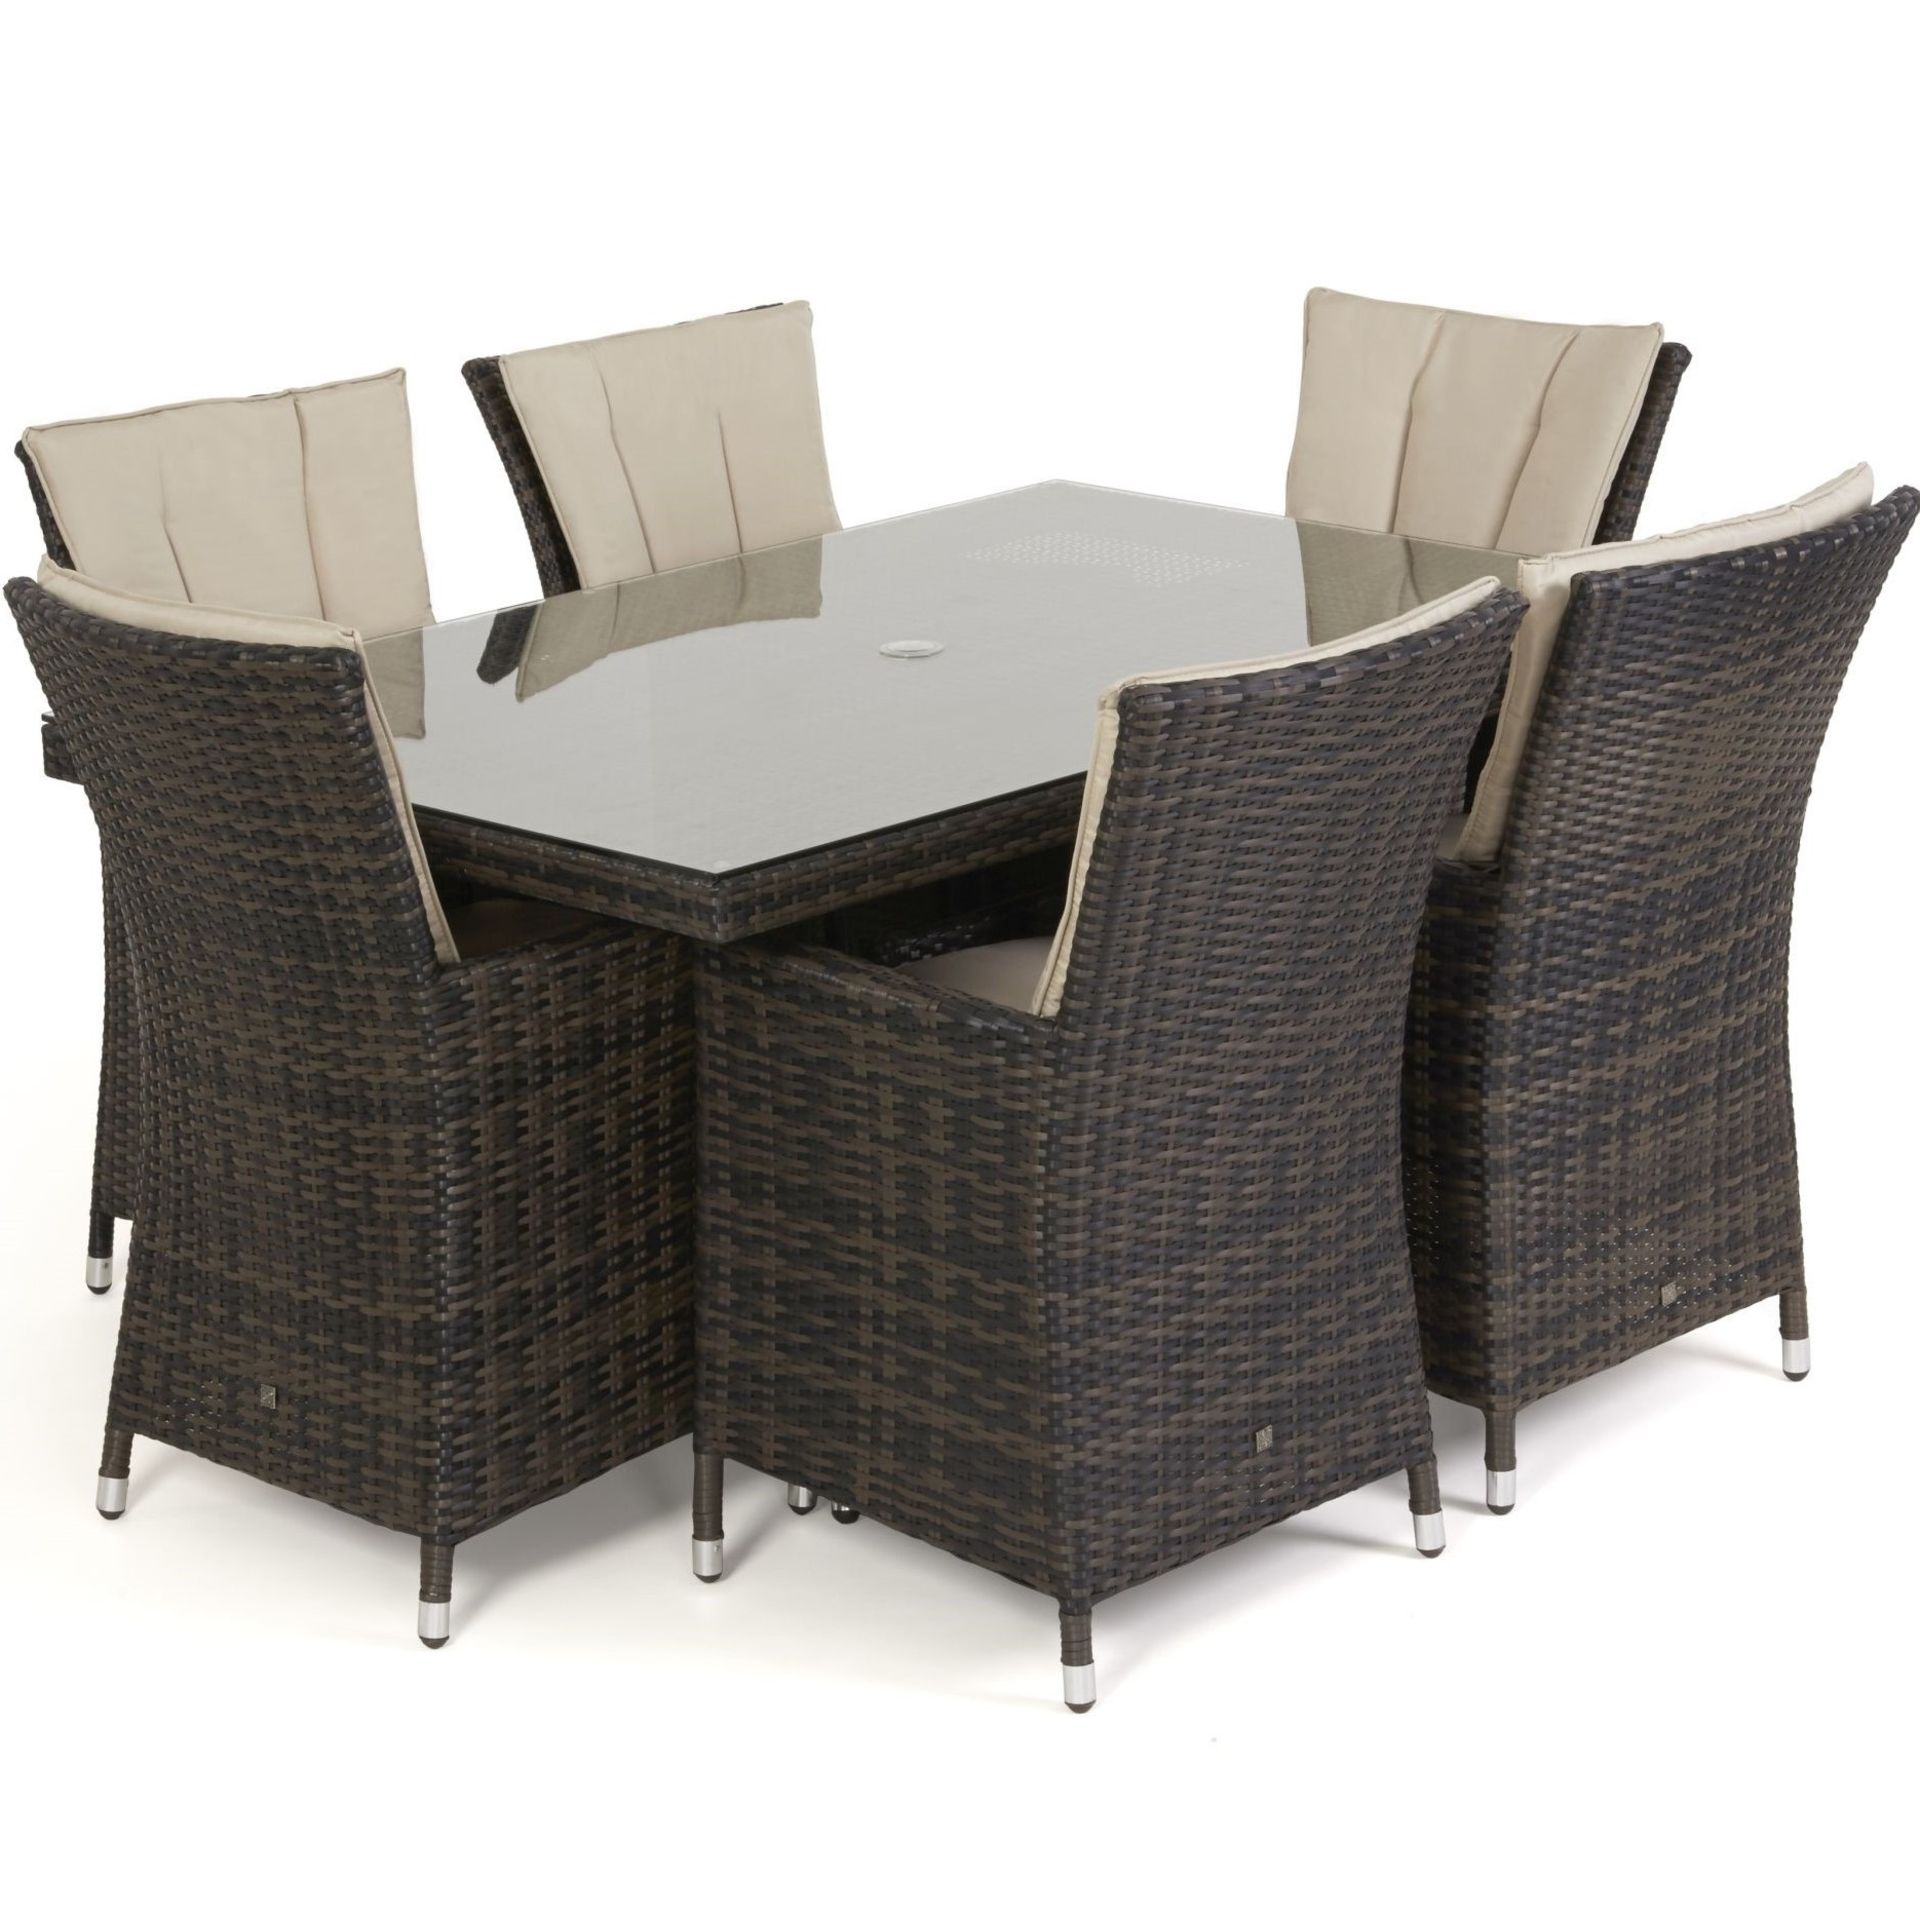 Rattan LA 6 Seat Rectangular Outdoor Dining Set (Brown) *BRAND NEW* - Image 2 of 2